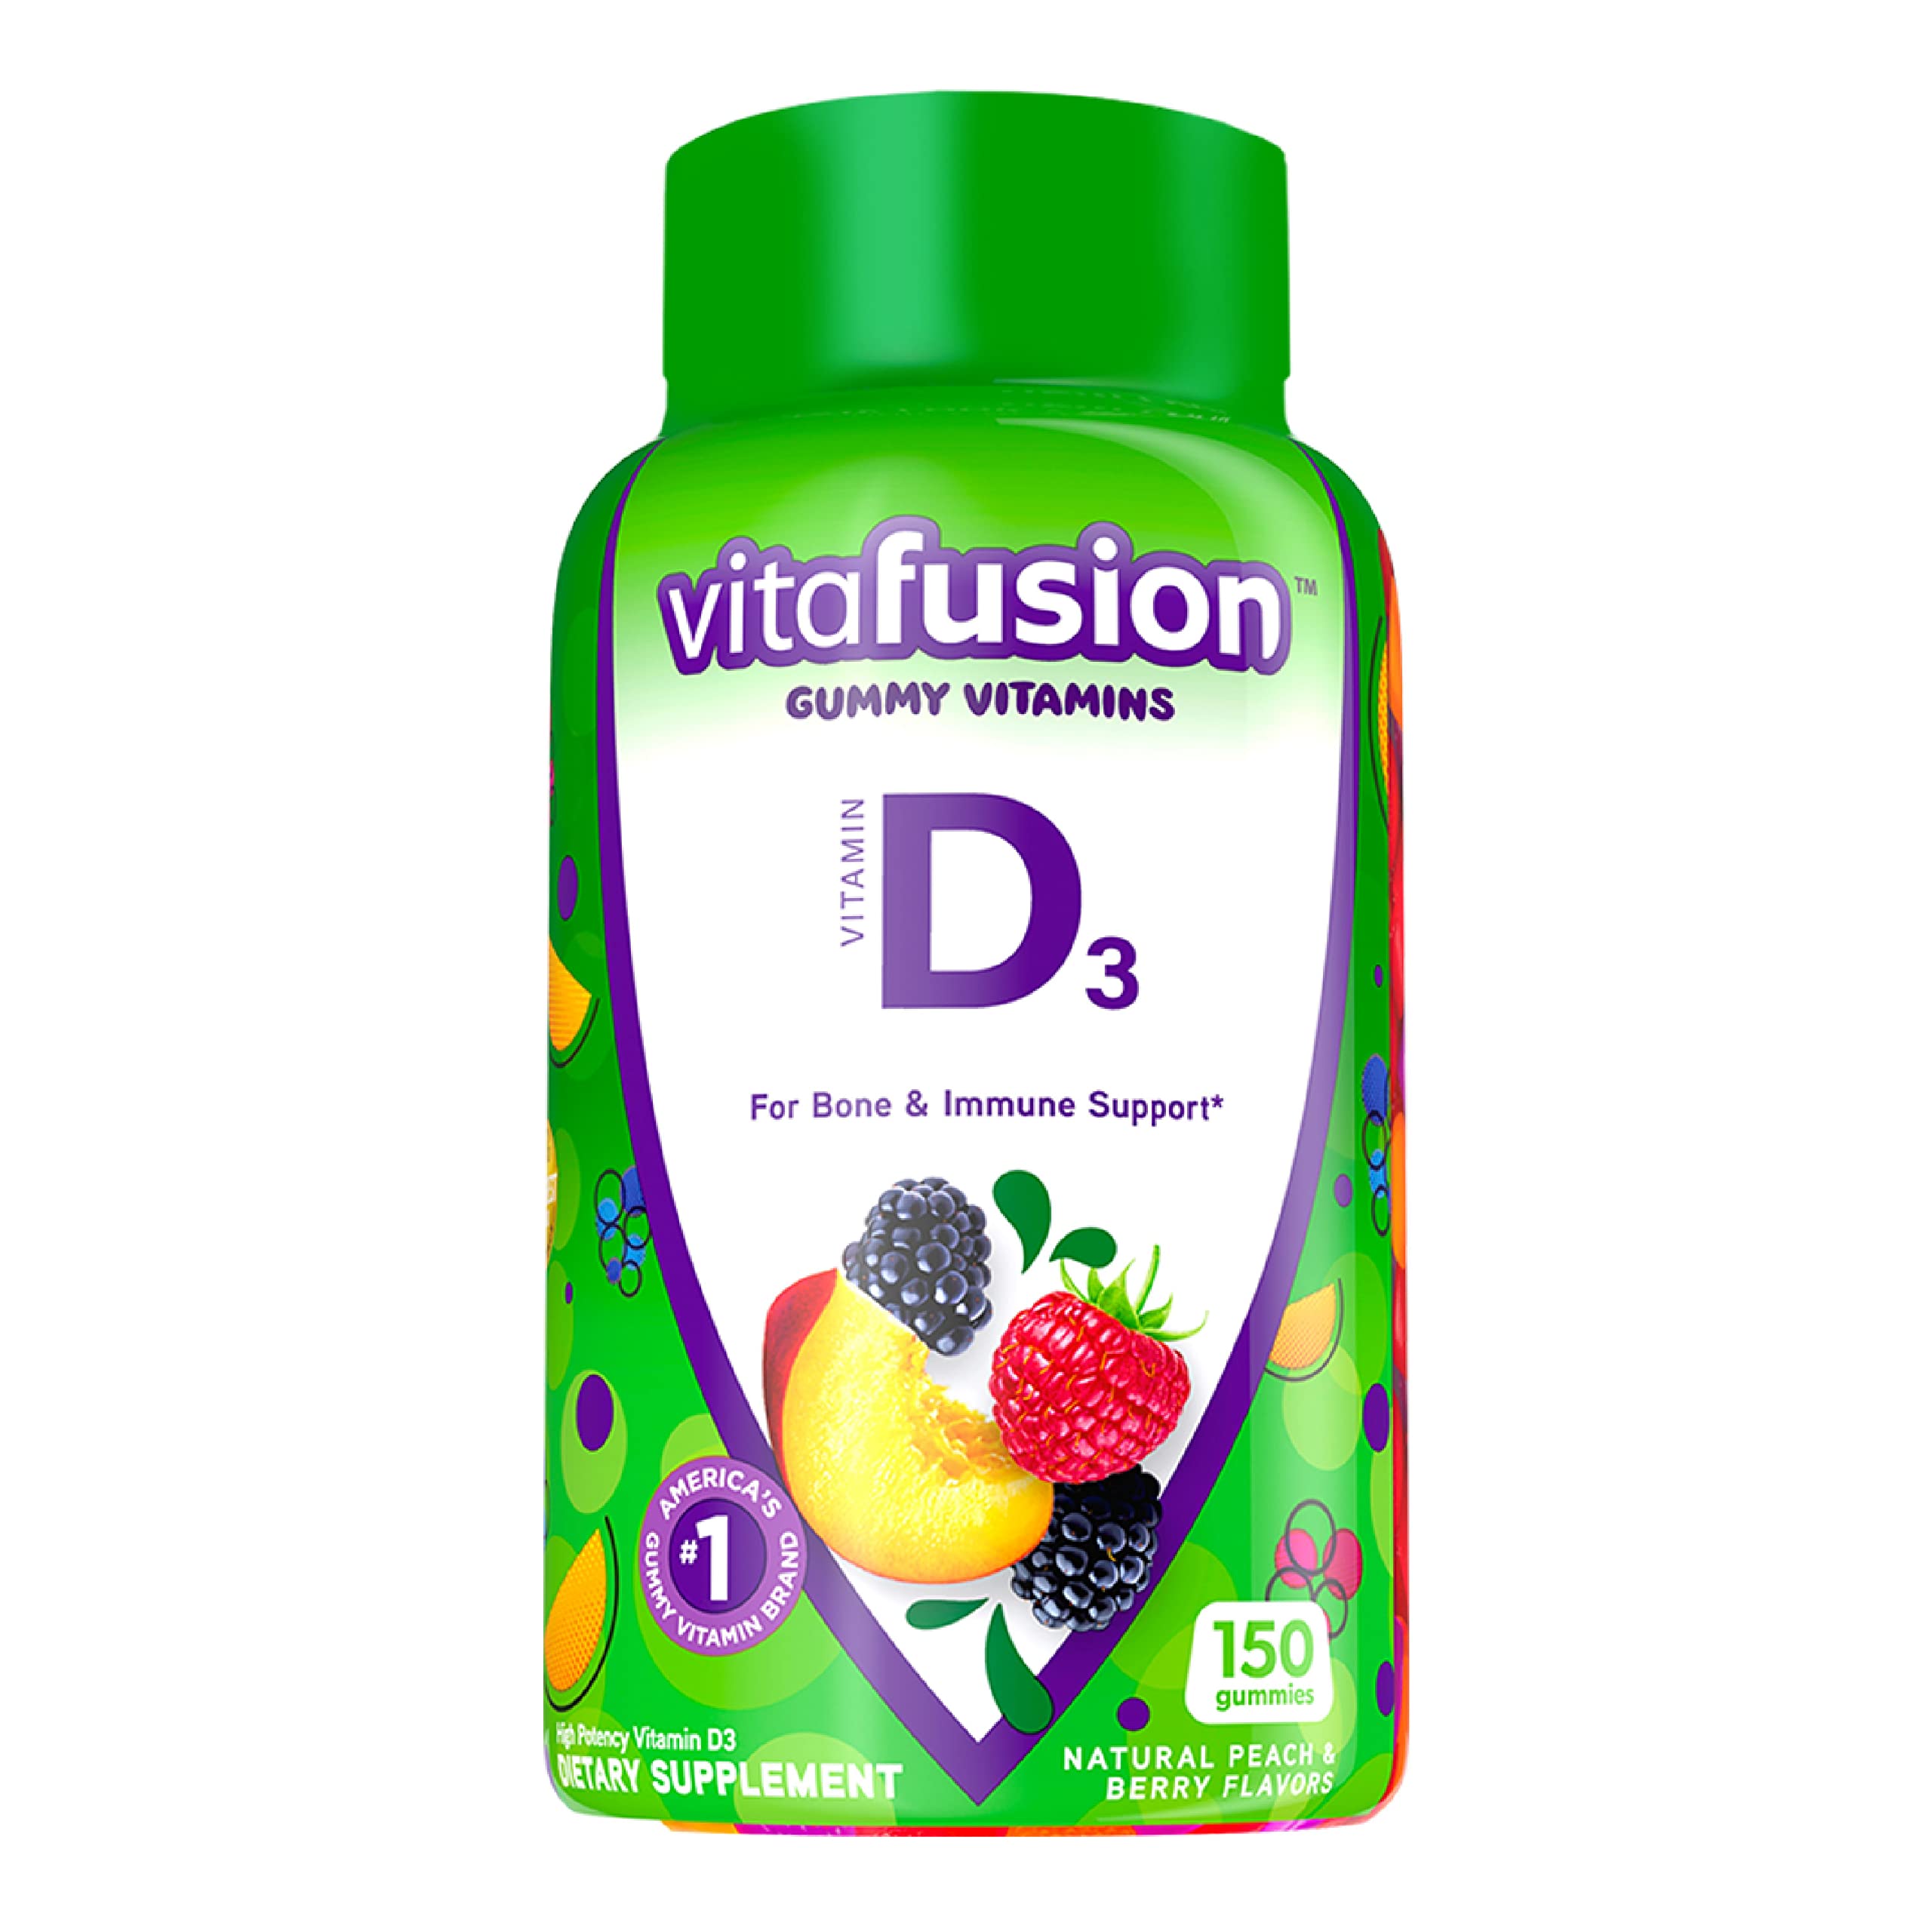 Mua Vitafusion Vitamin D3 Gummy Vitamins for Bone and Immune System ...